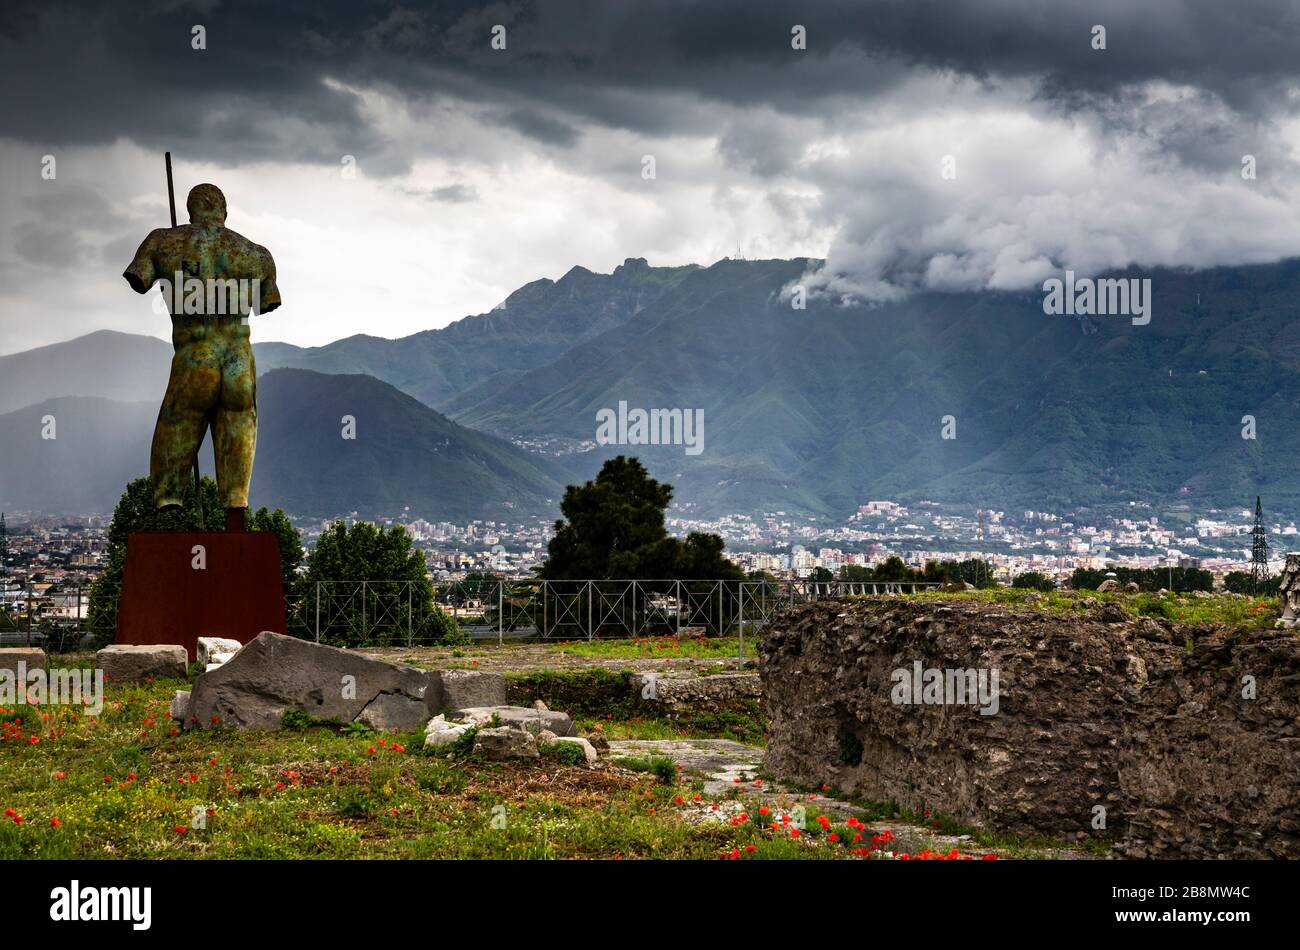 Igor Mitorajs Skulptur Daedalus in der Nähe des Tempels der Venus, Pompeji, Kampanien, Italien. Stockfoto